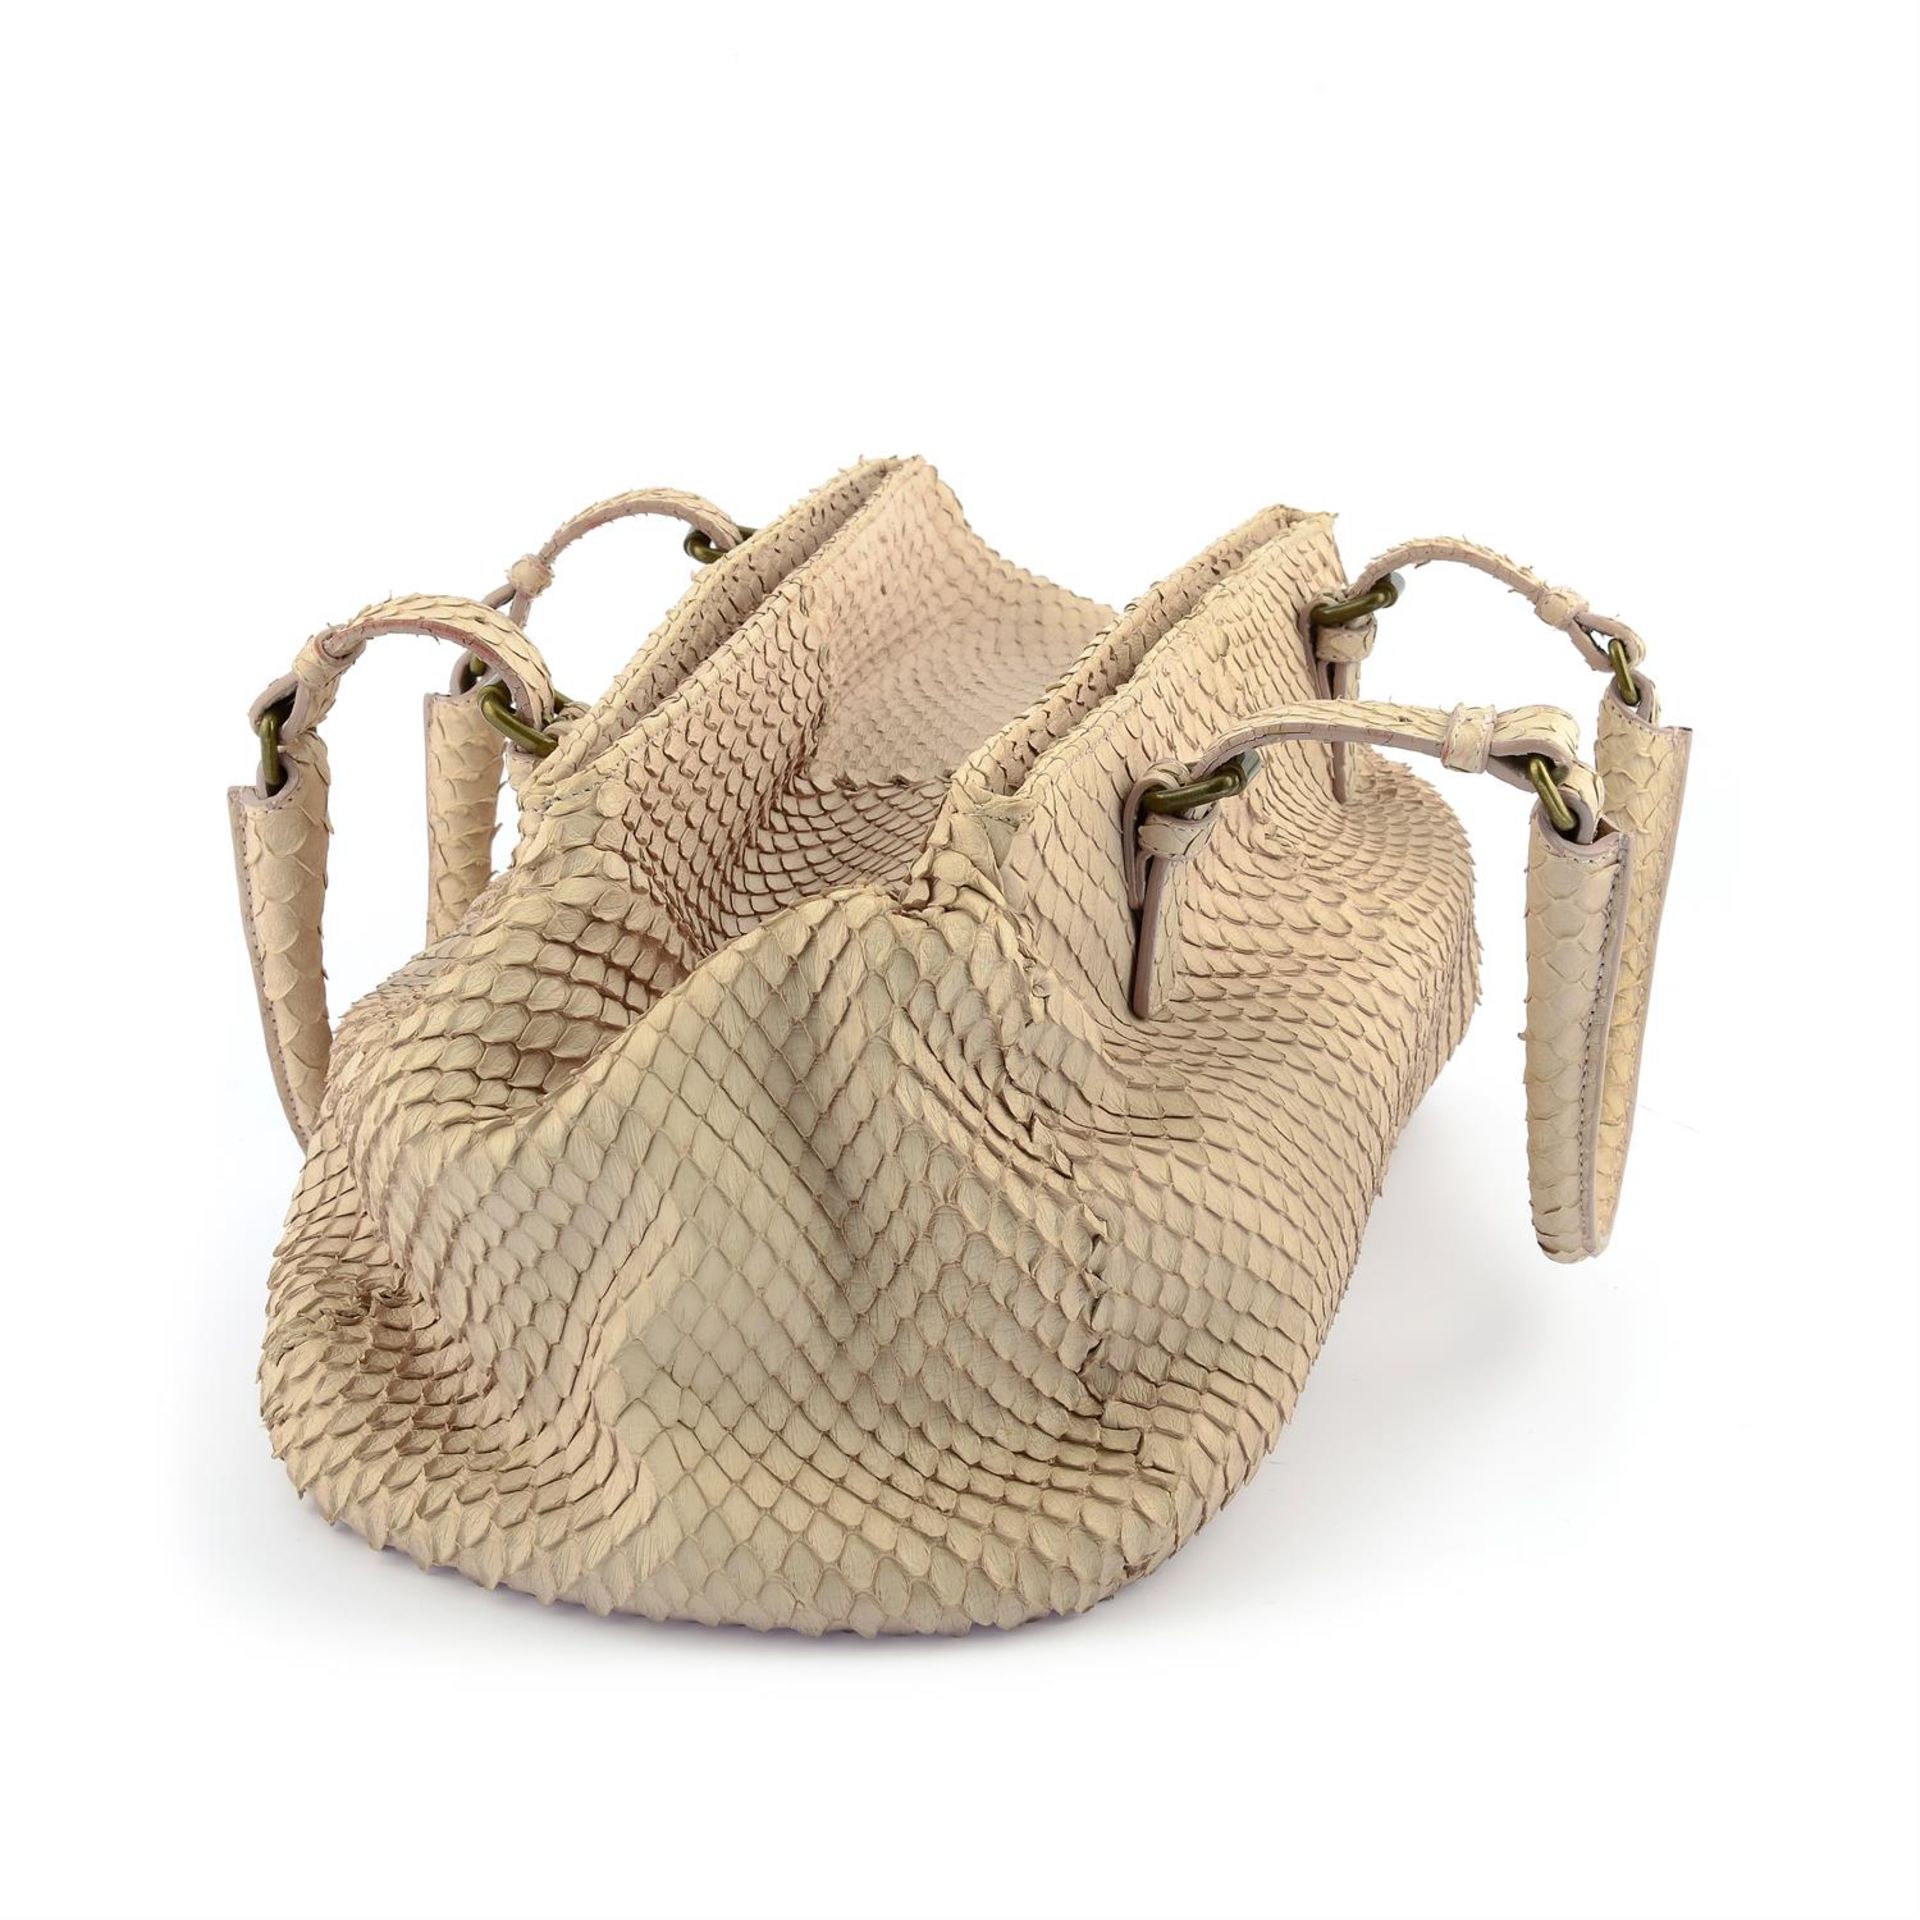 BOTTEGA VENETA - a beige Python leather handbag. - Bild 3 aus 6